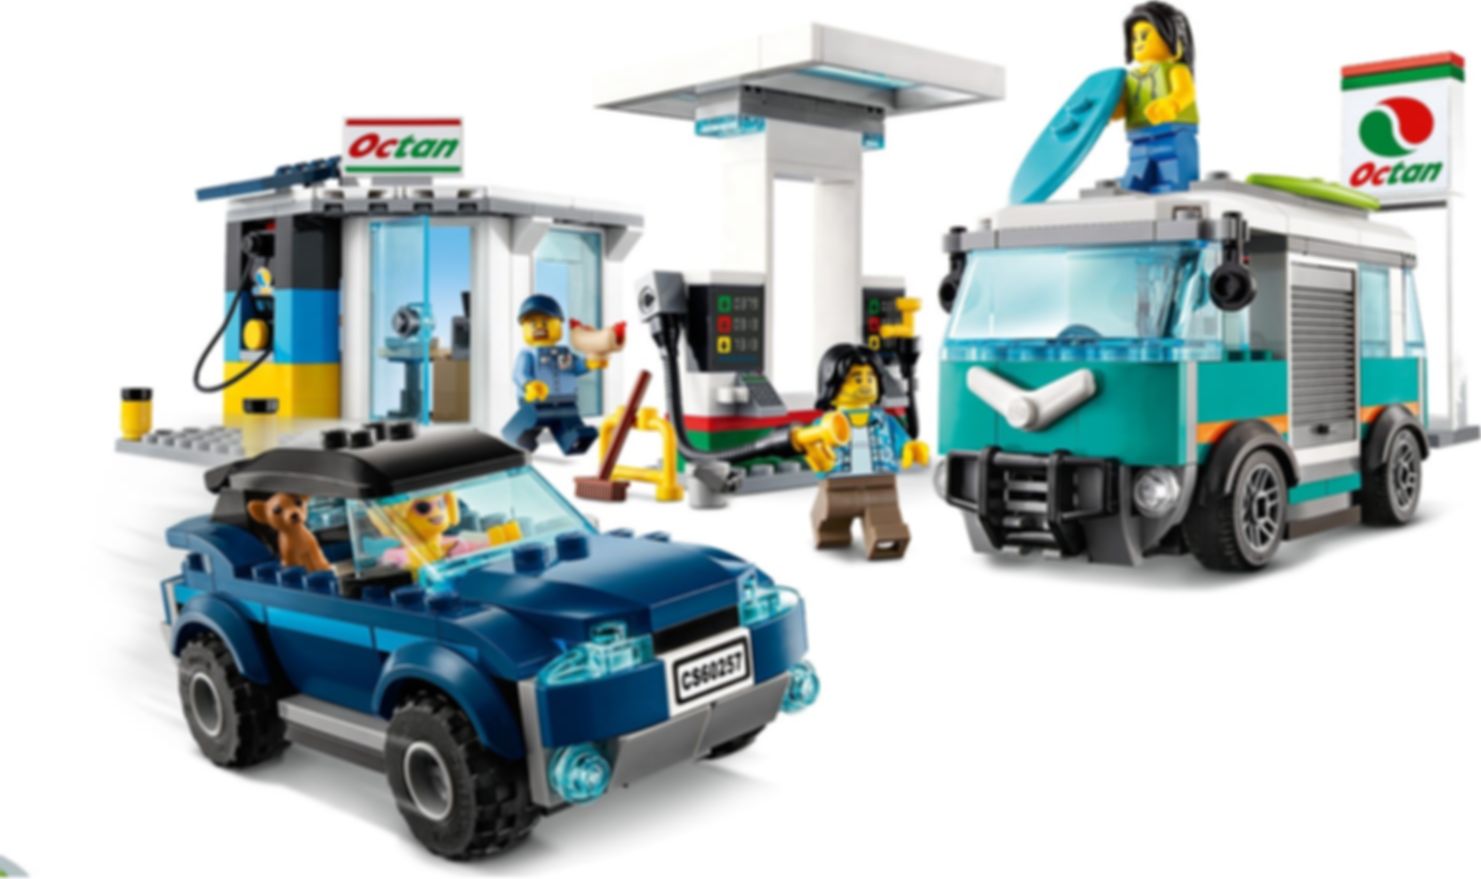 60257 LEGO® CITY Petrol station